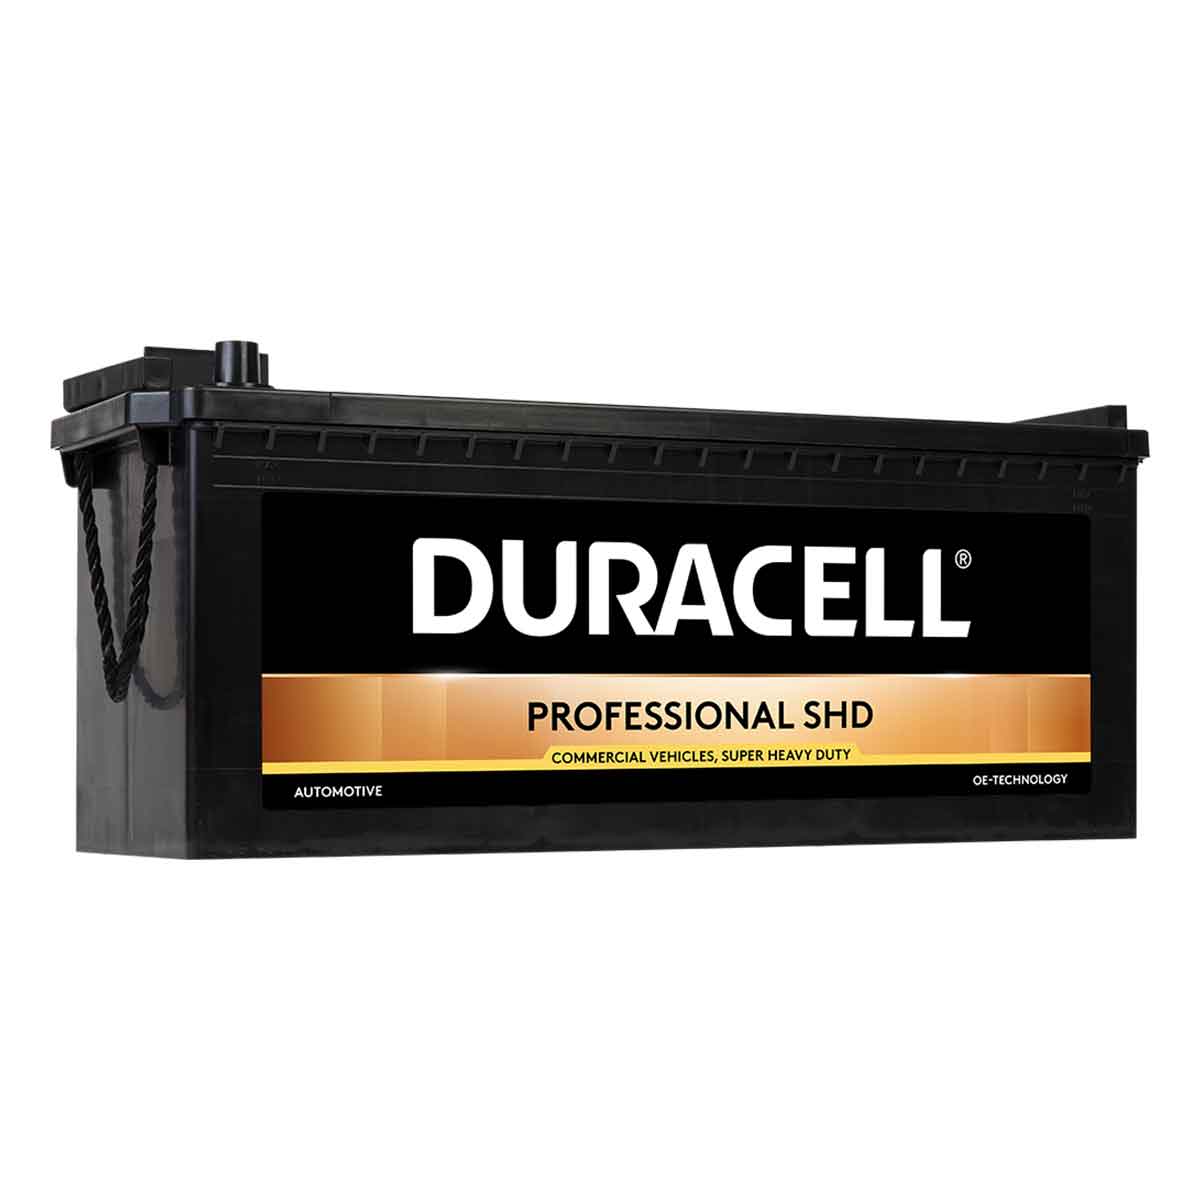 Duracell-Professional-Range.jpg